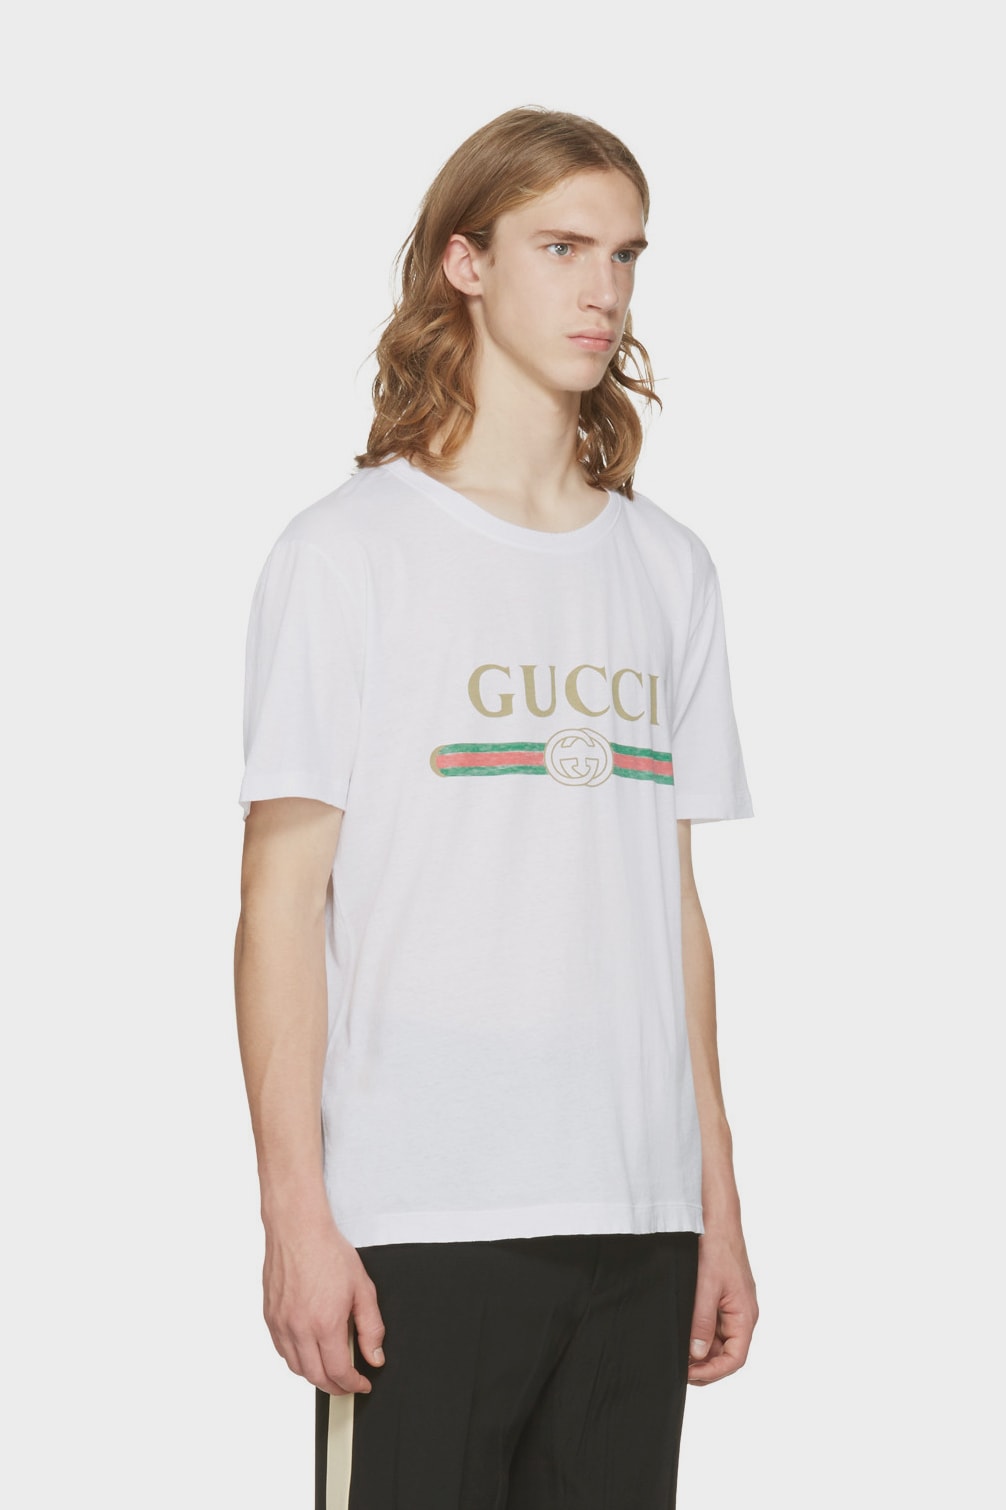 Gucci Printed Tee SSENSE